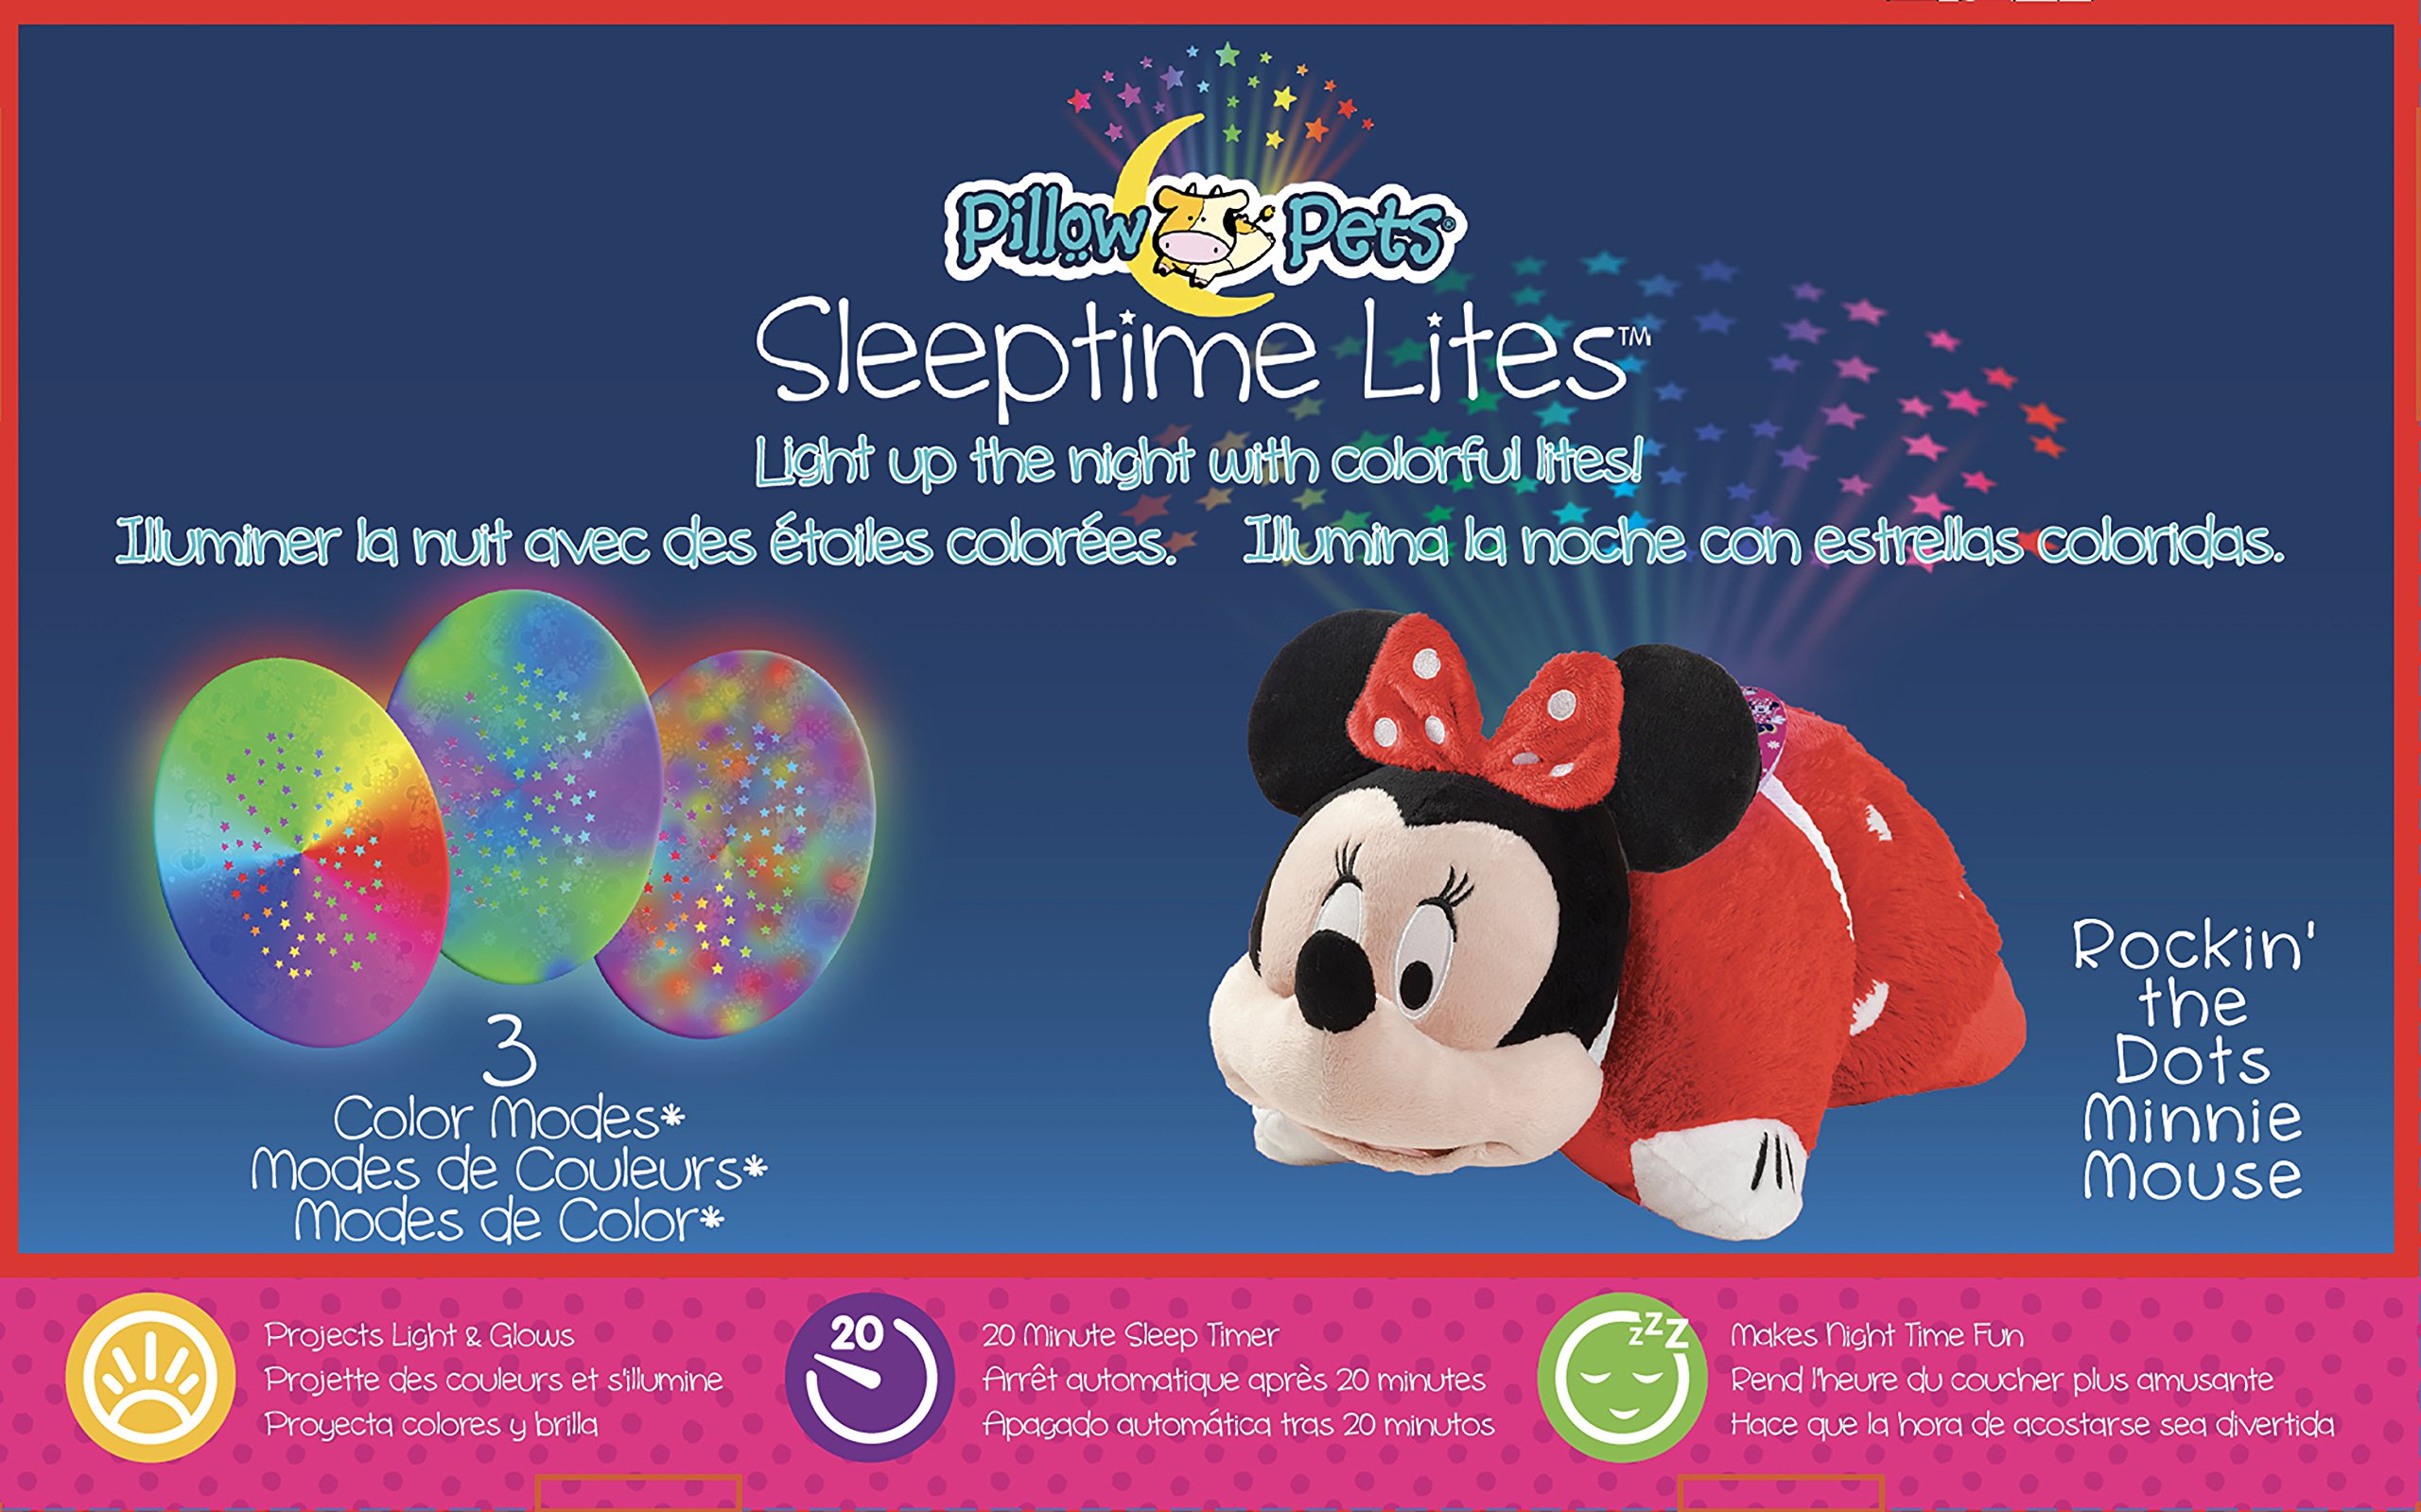 Pillow Pets Disney Rockin the Dots Minnie Mouse Sleeptime Lites - Retro Minnie Mouse Plush Night Light